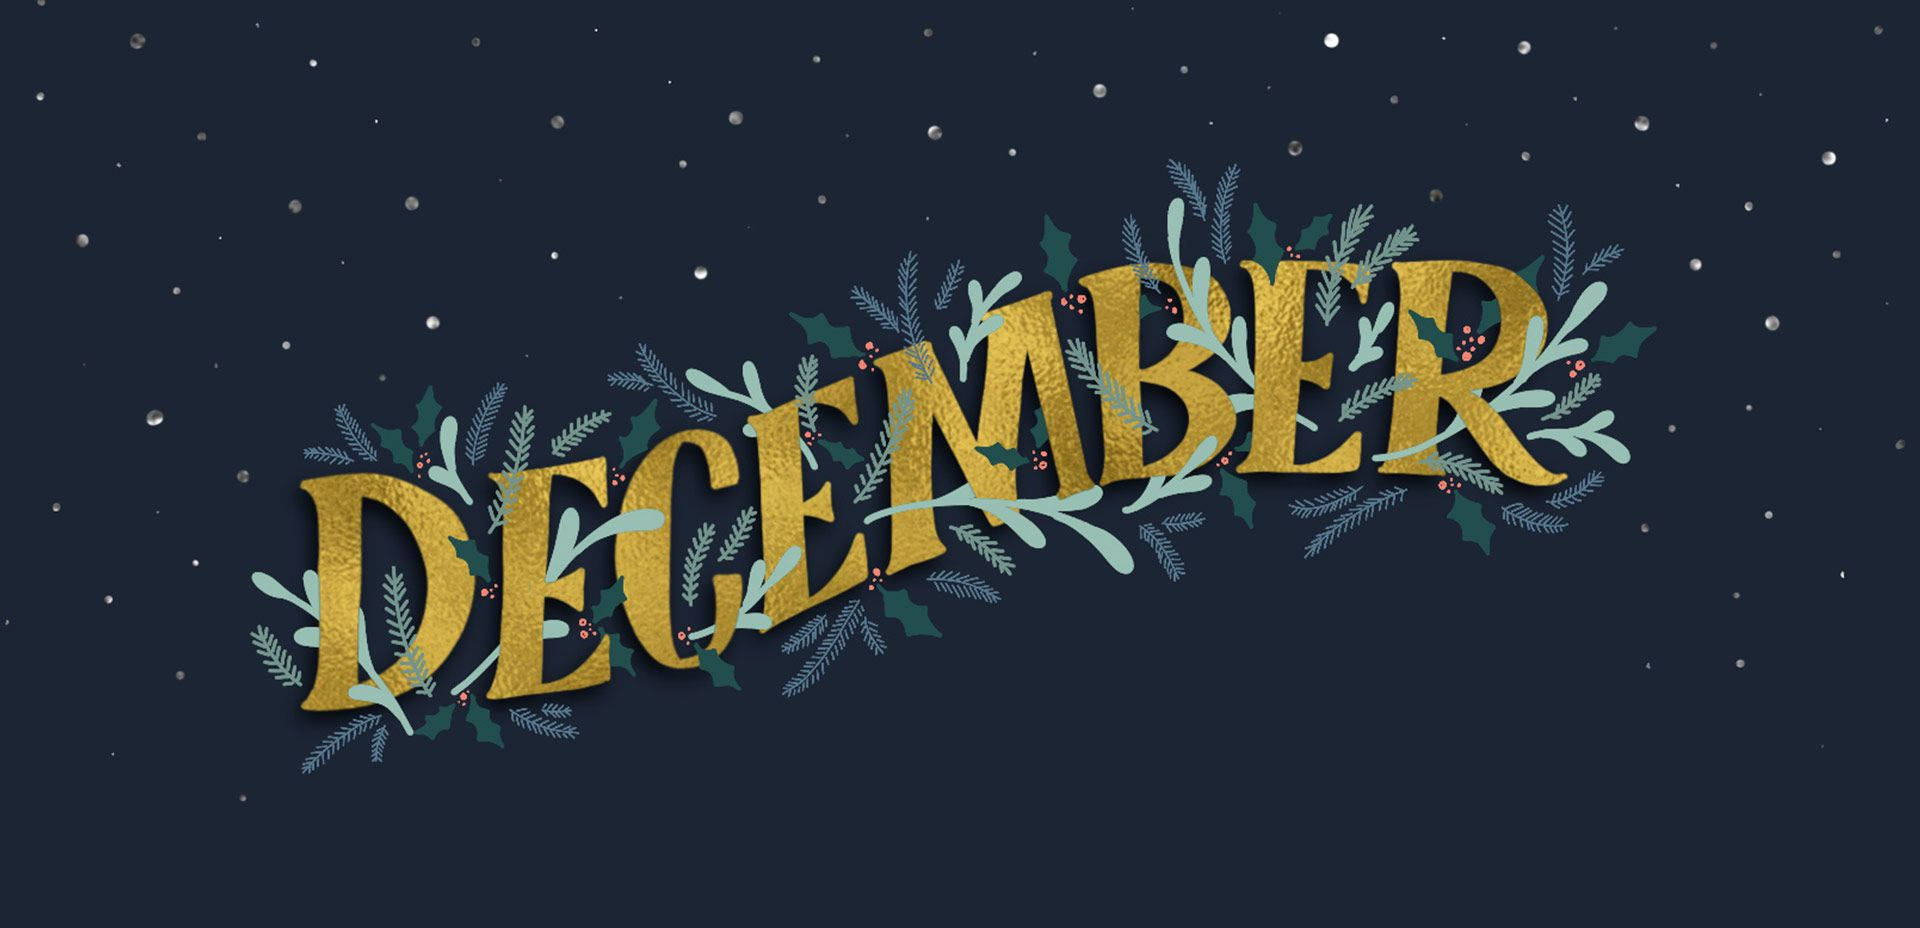 December Lettering Design Wallpaper